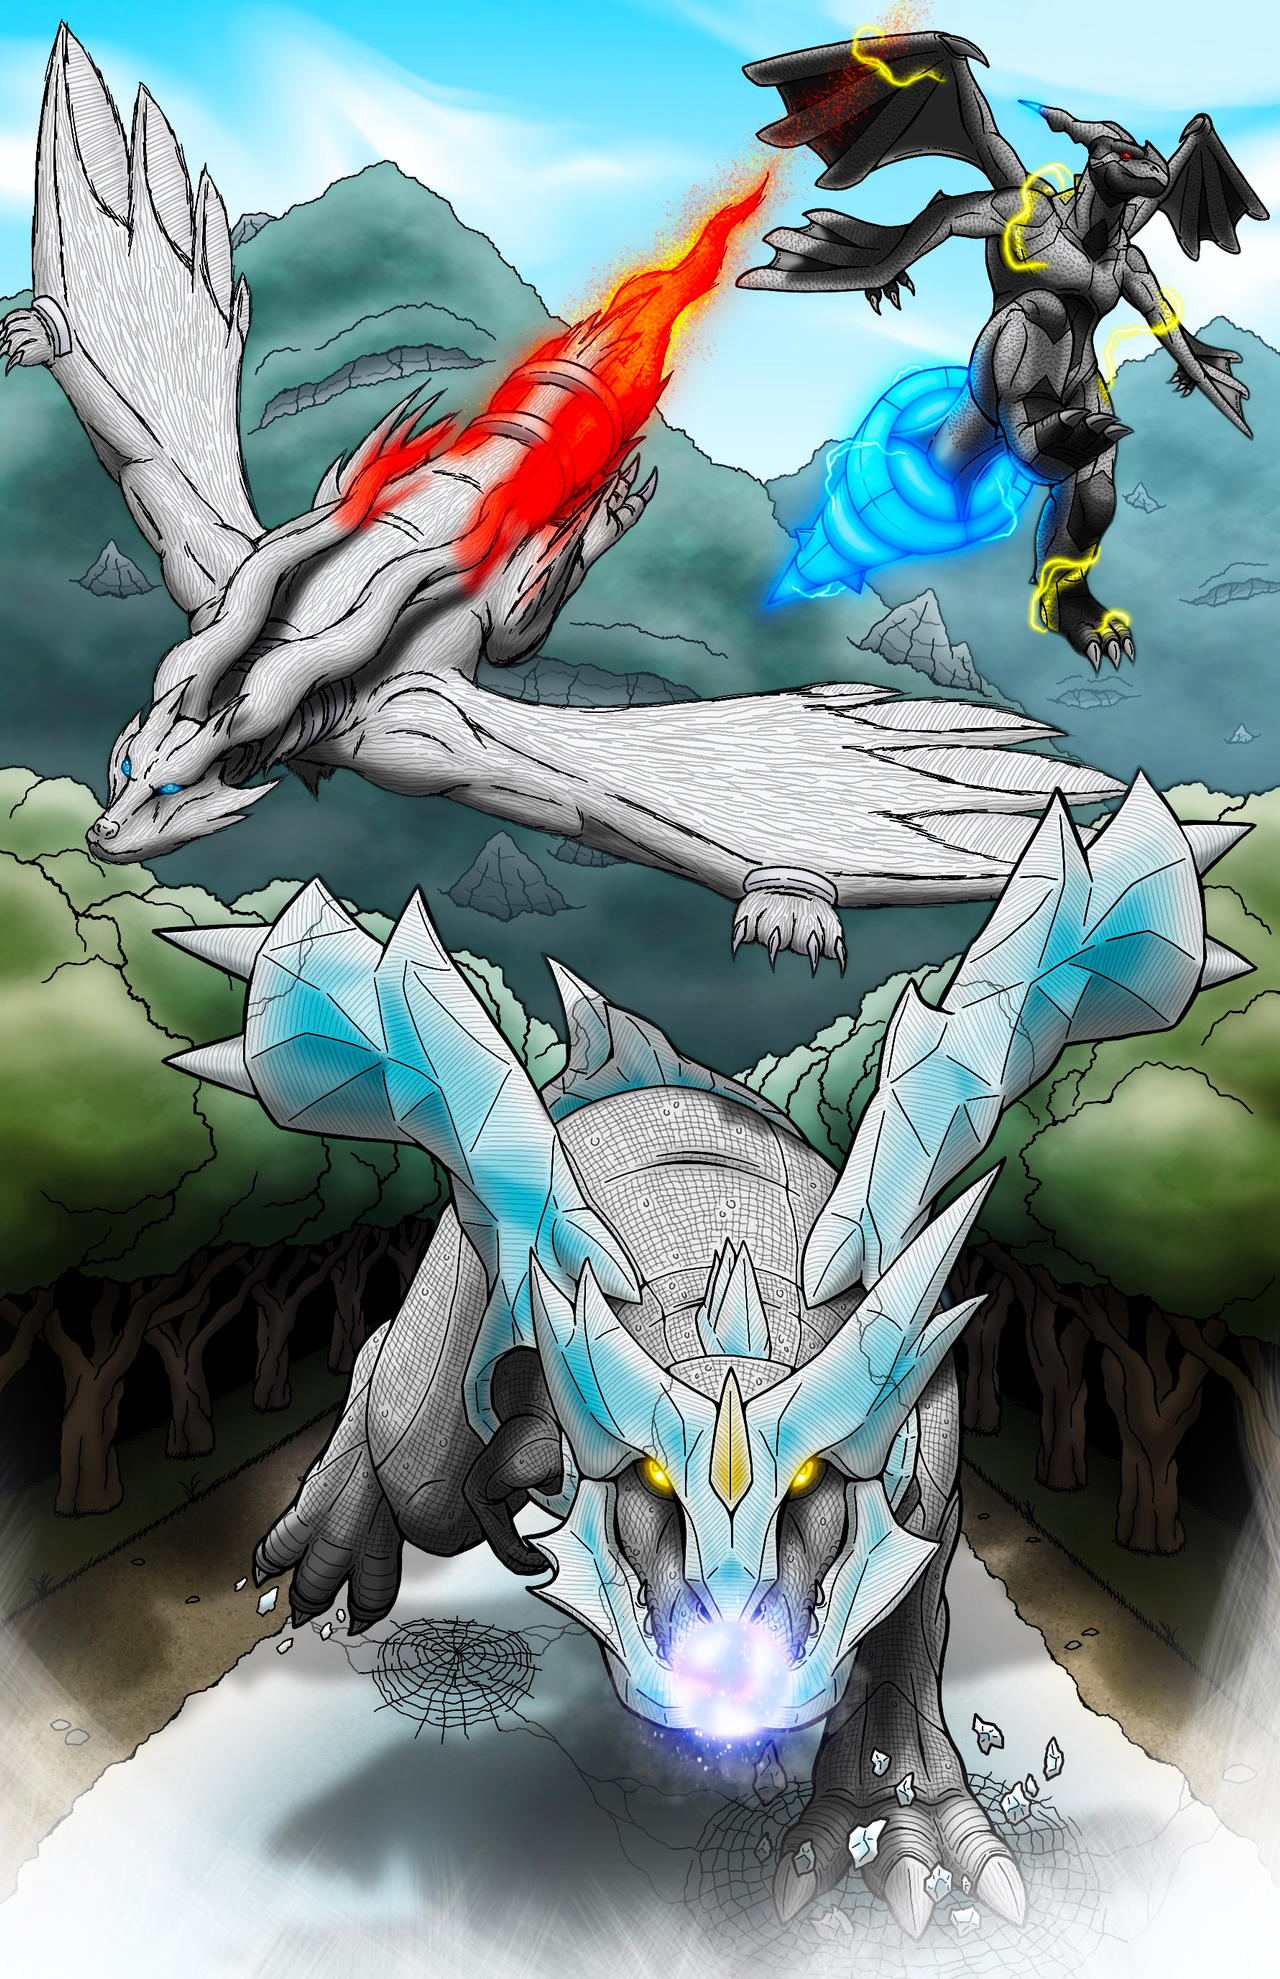 Pokémon-Fanpage - This is legendary Trio Tao. Trio consists of